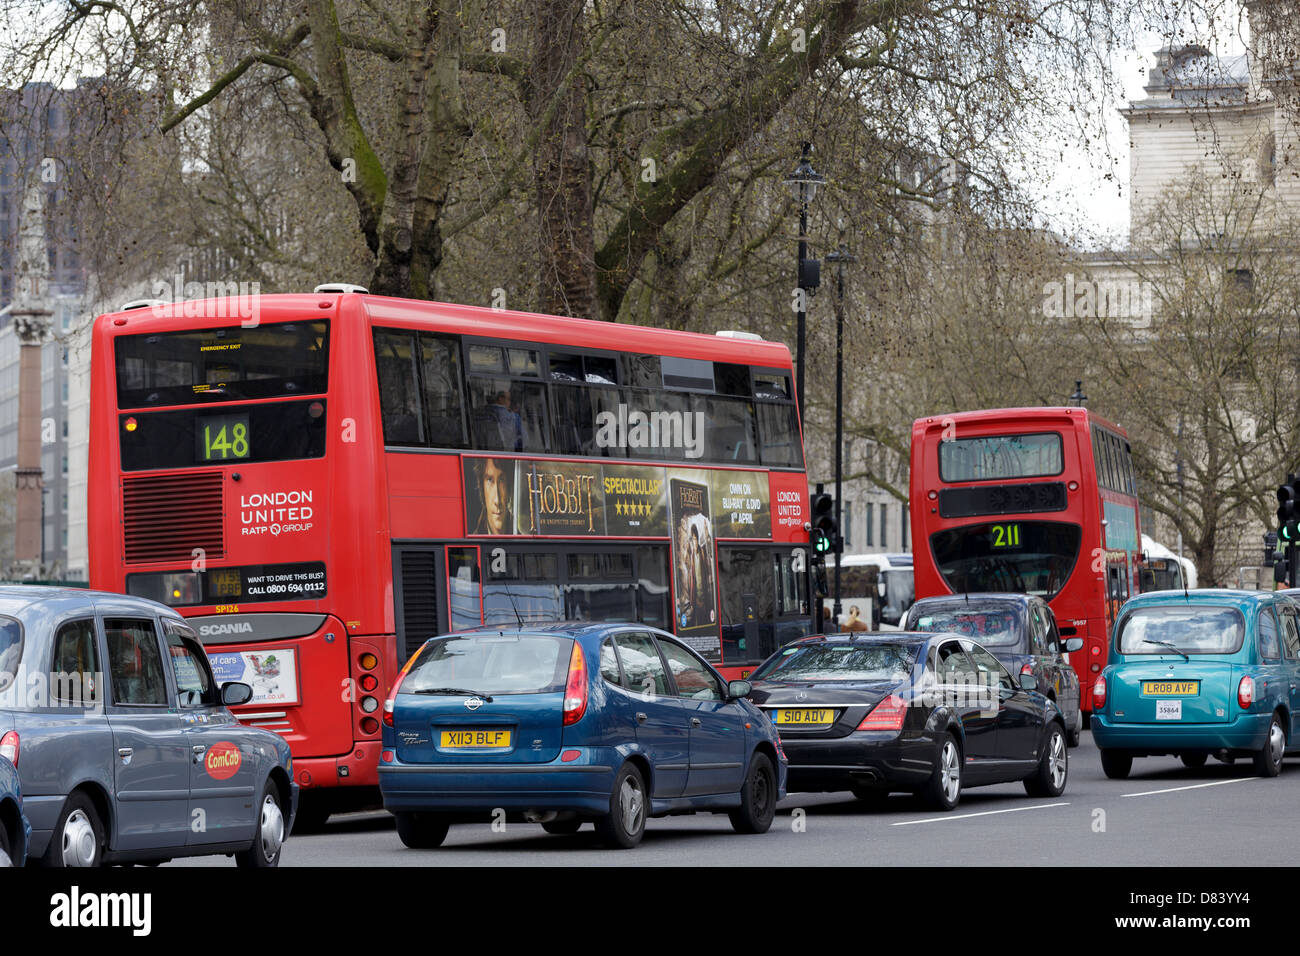 London double decker buses in London, United kingdom Stock Photo